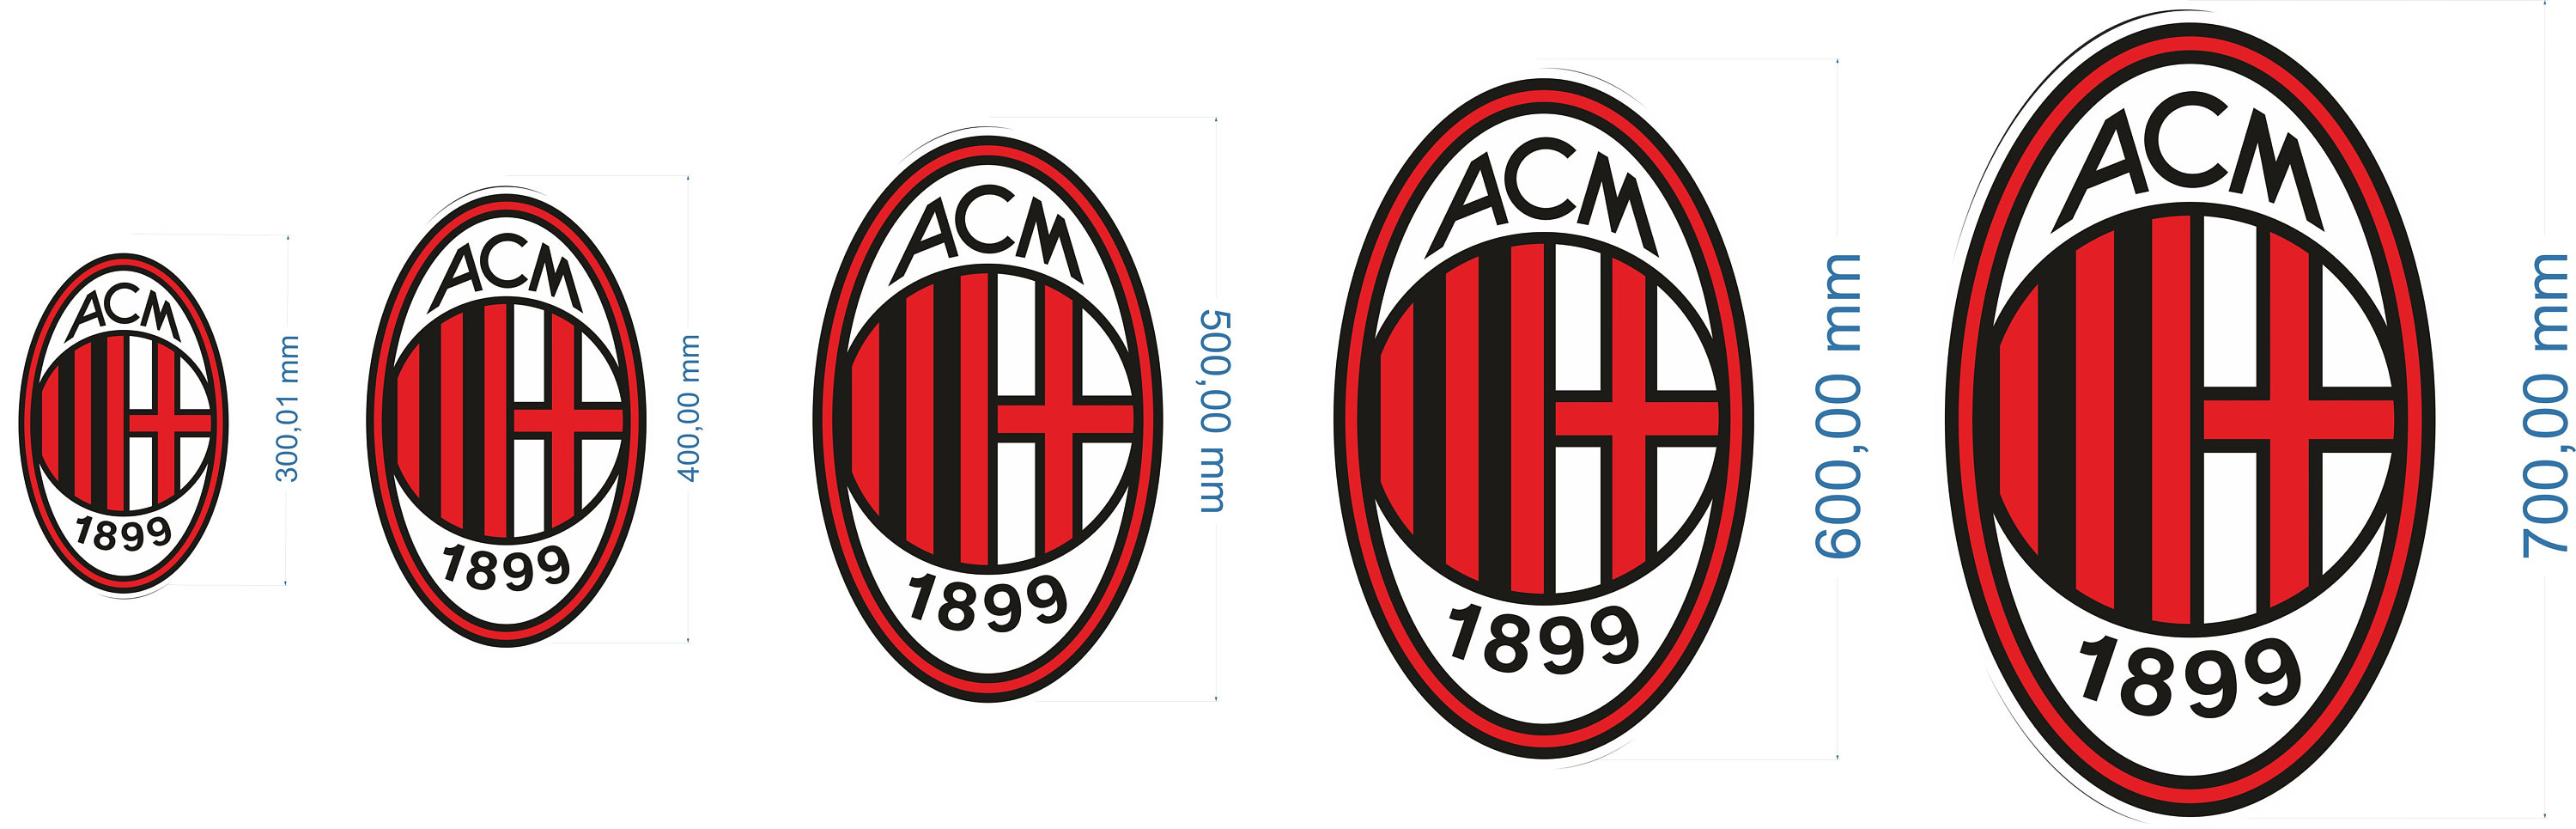 463 Ac Milan Logo Images, Stock Photos, 3D objects, & Vectors